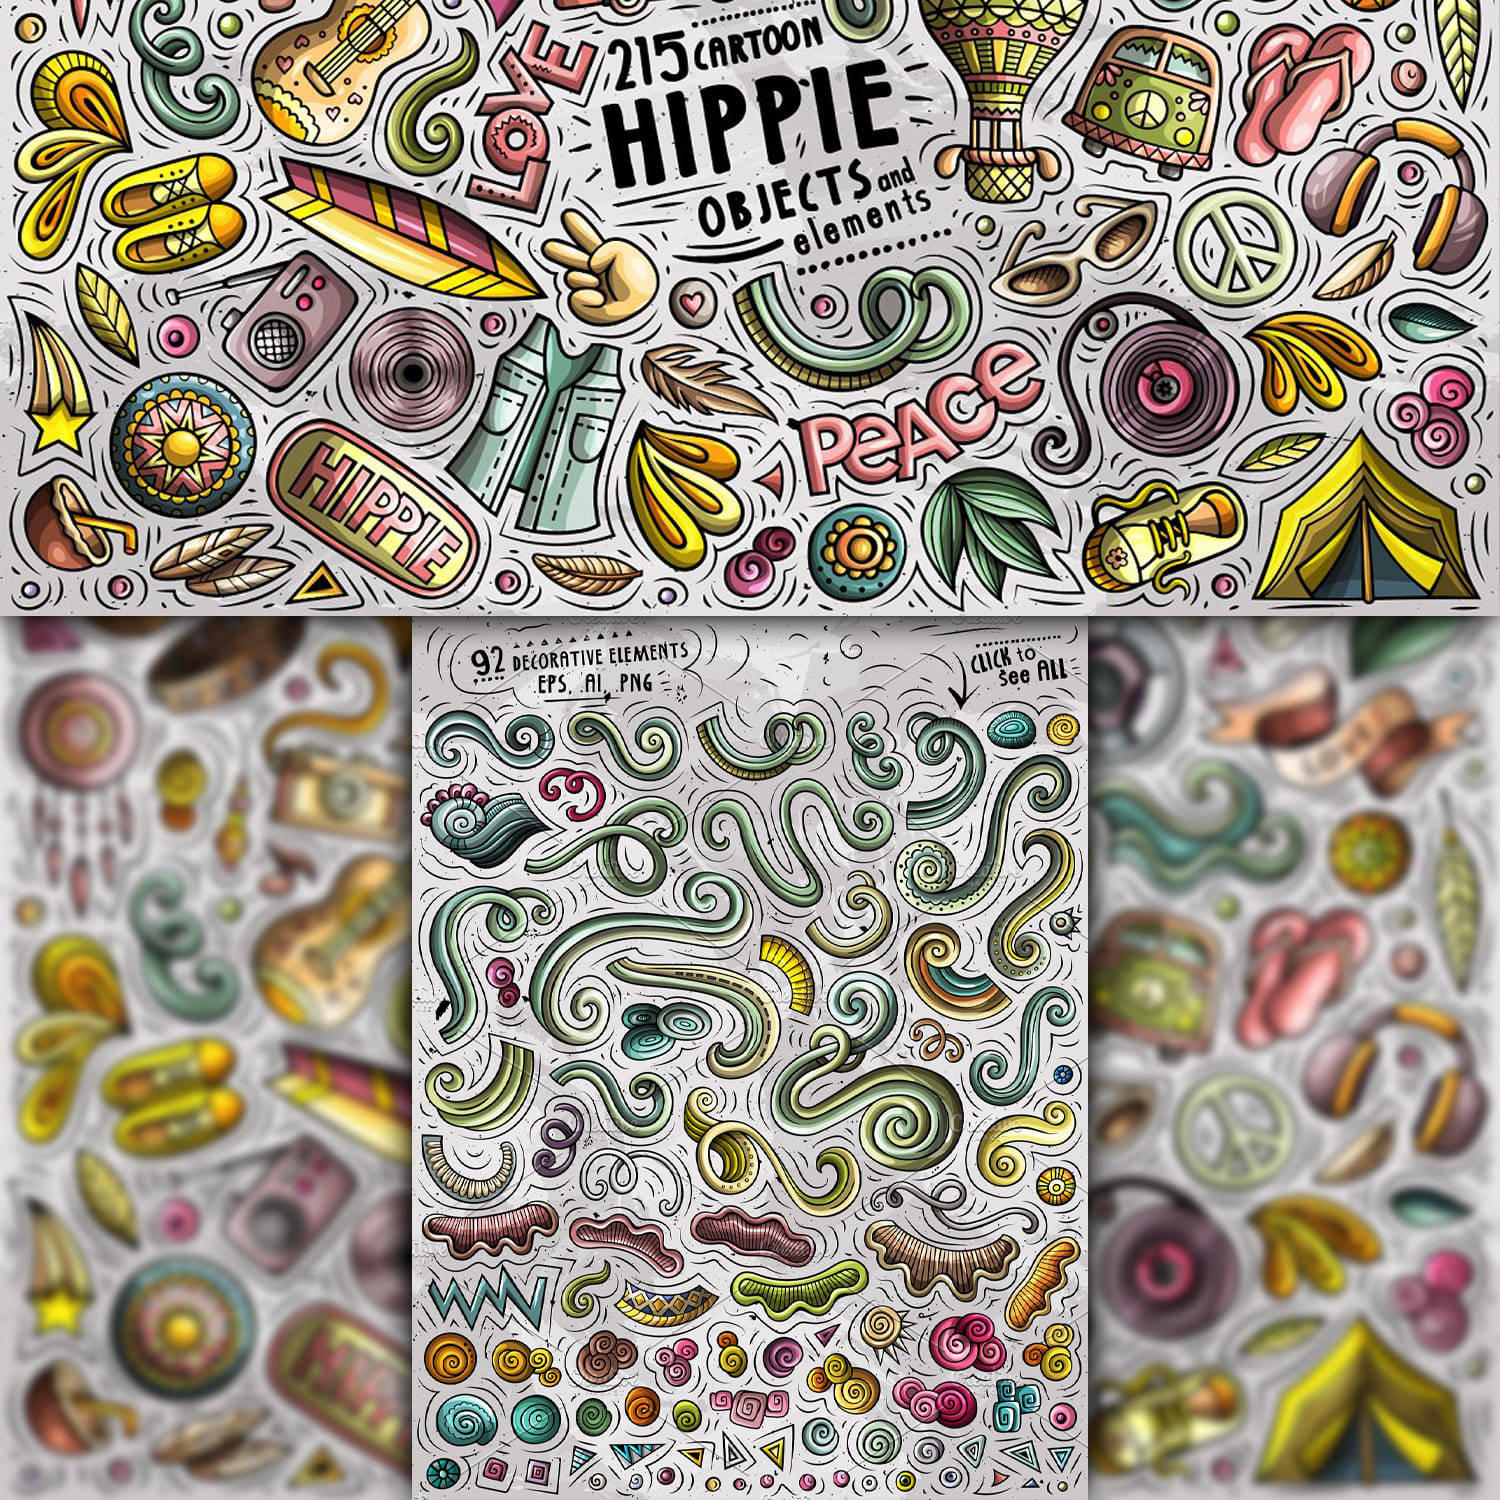 Hippie Cartoon Objects Set 1500 1500 2.